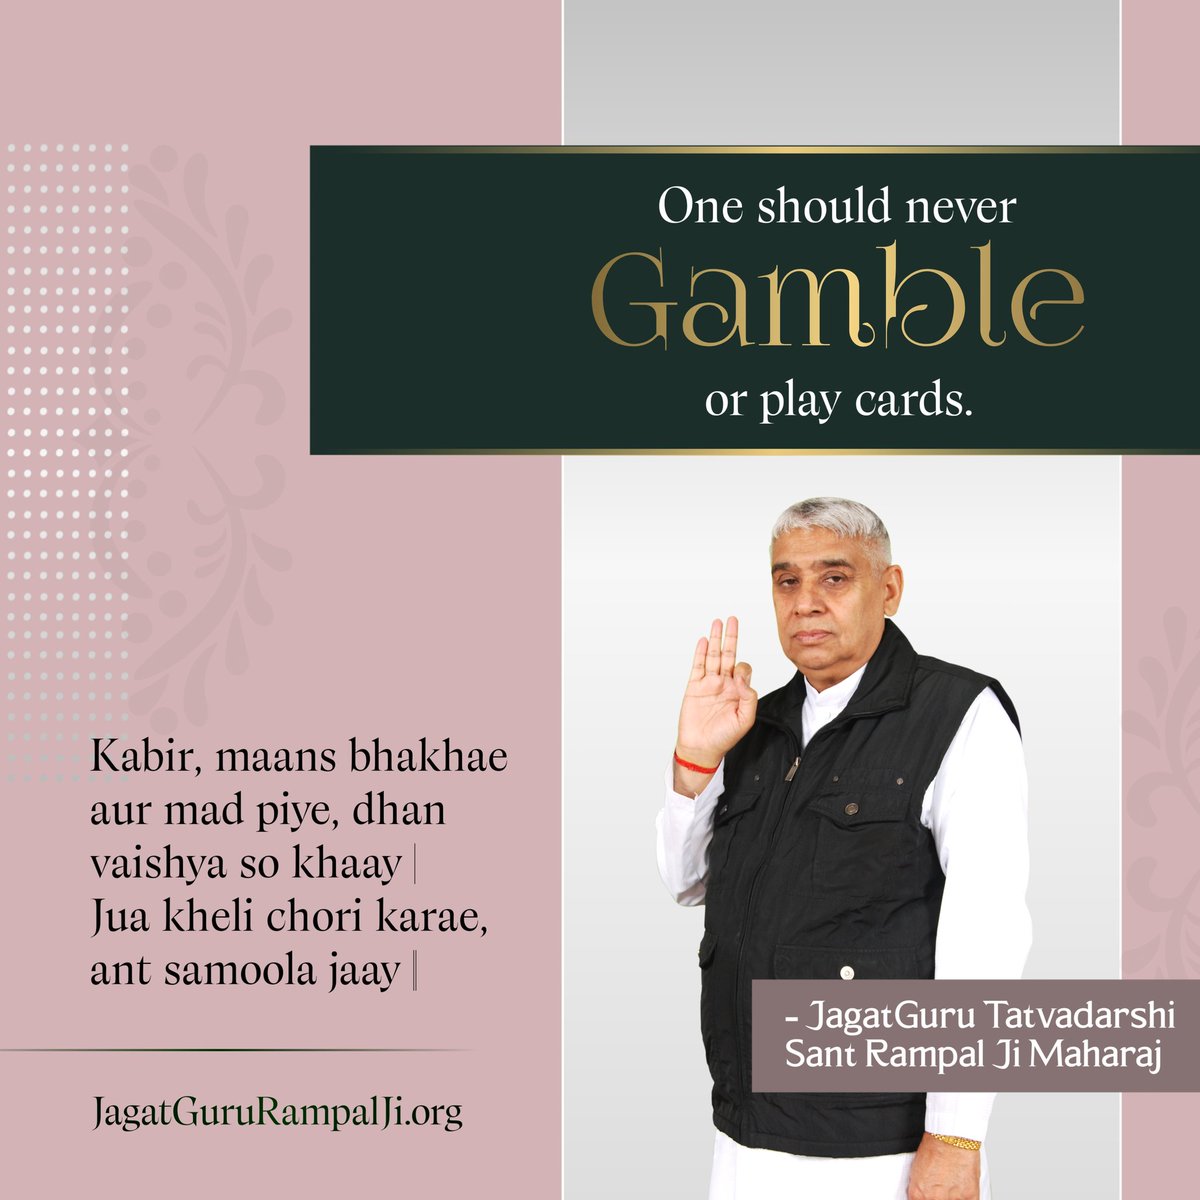 One should never gamble or play cards...
#GodMorningWednesday
#SaintRampalJiQuotes